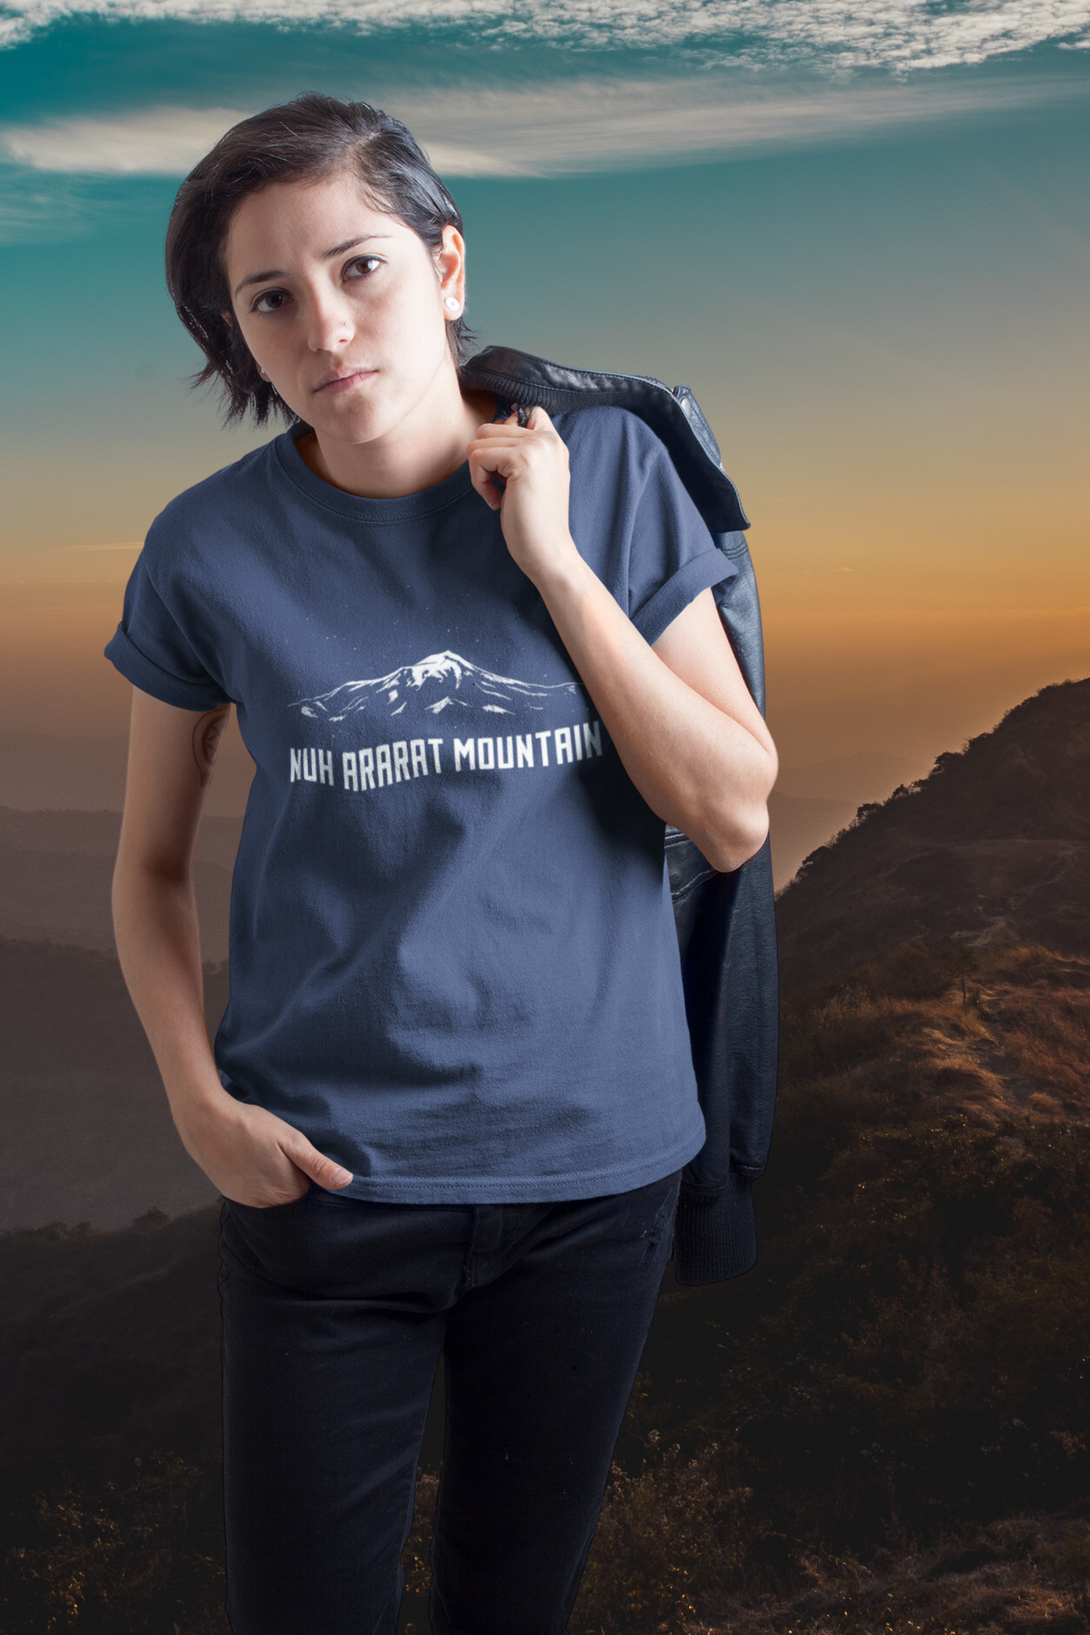 Nuh Ararat Mountain Printed T-Shirt For Women - WowWaves - 3